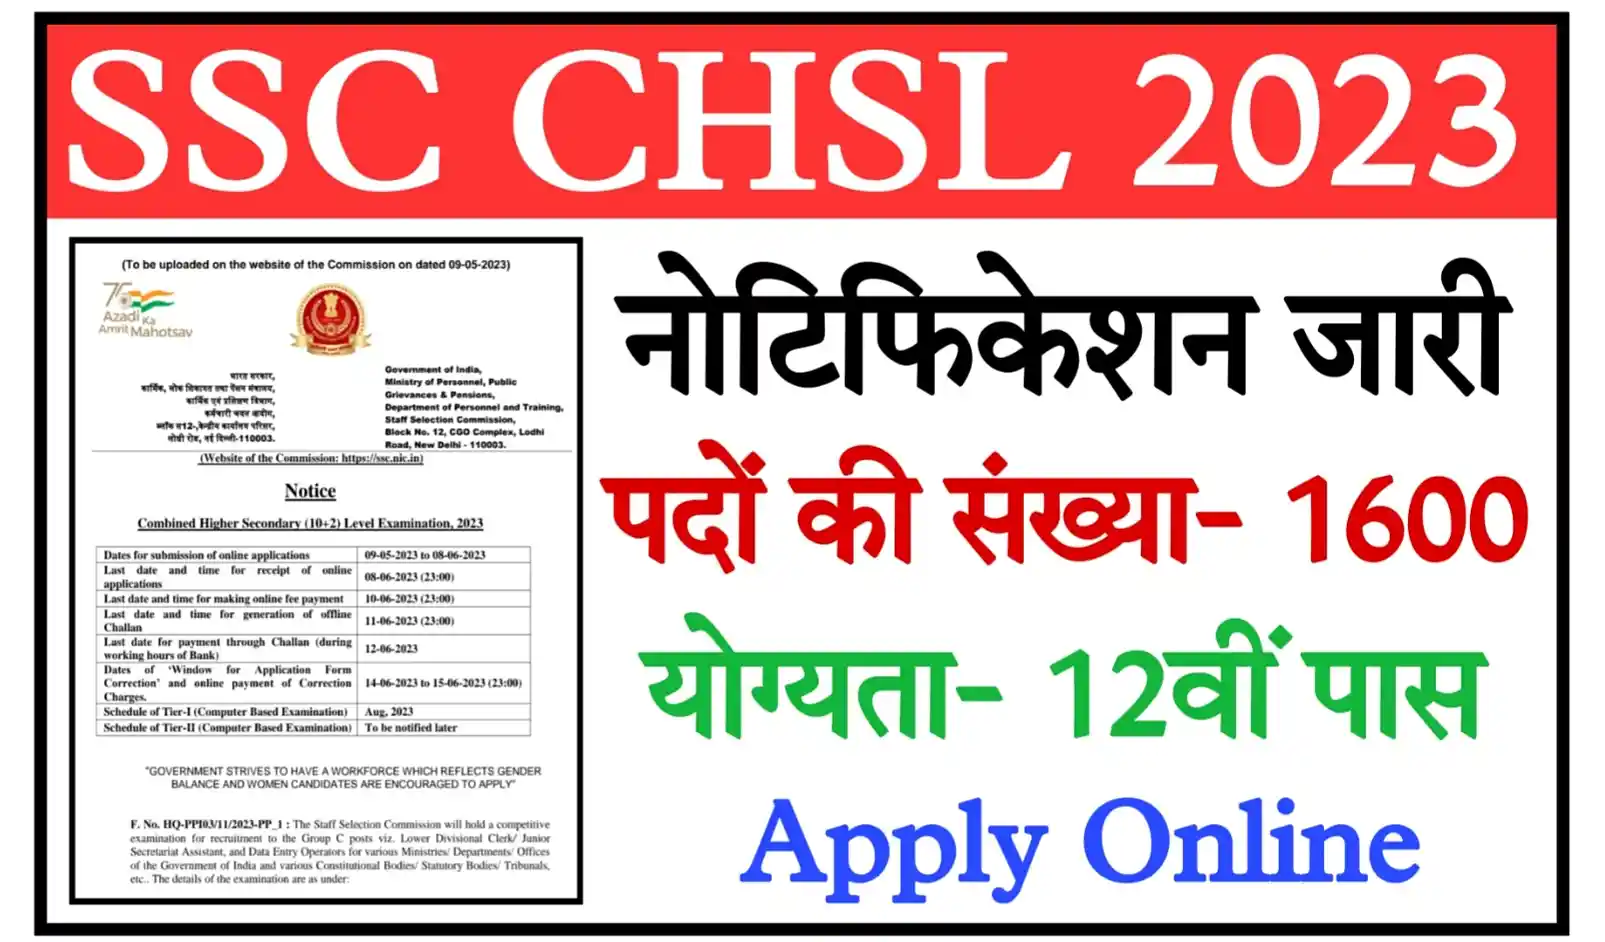 SSC CHSL 2023 Notification, Apply Online (1600 Posts) Exam Date, Syllabus Check All Details